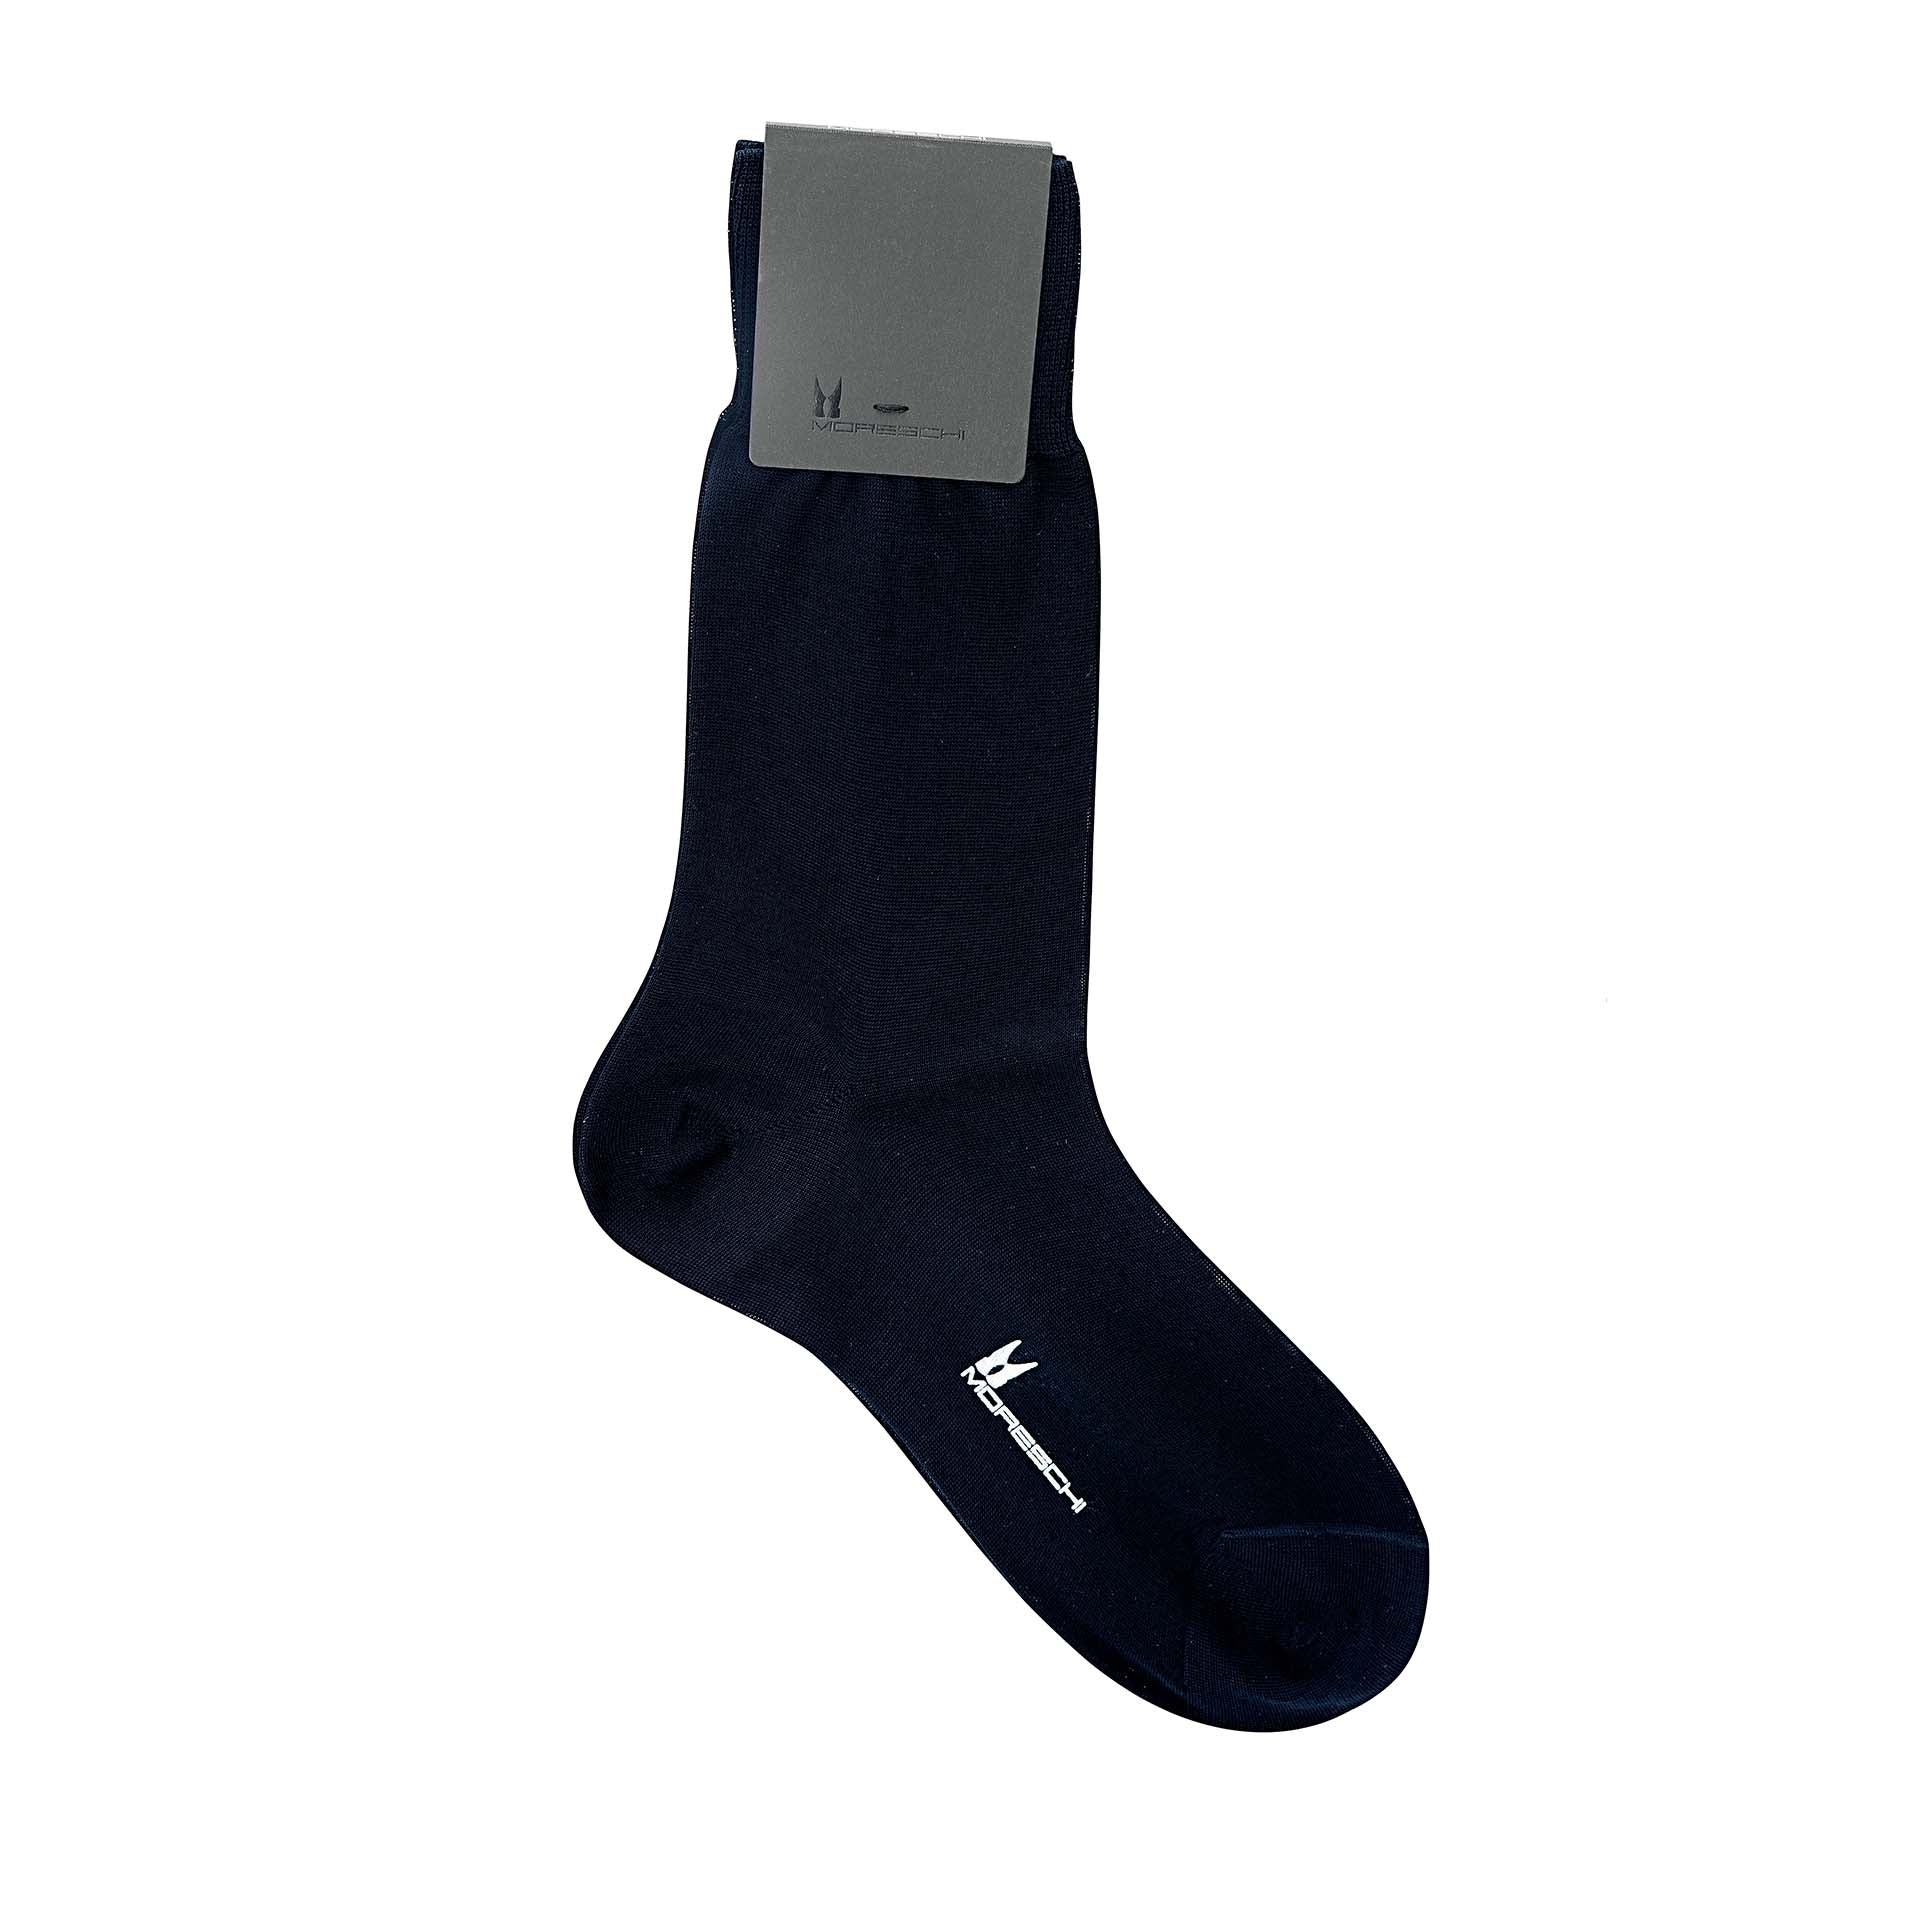 Dark blue cotton socks